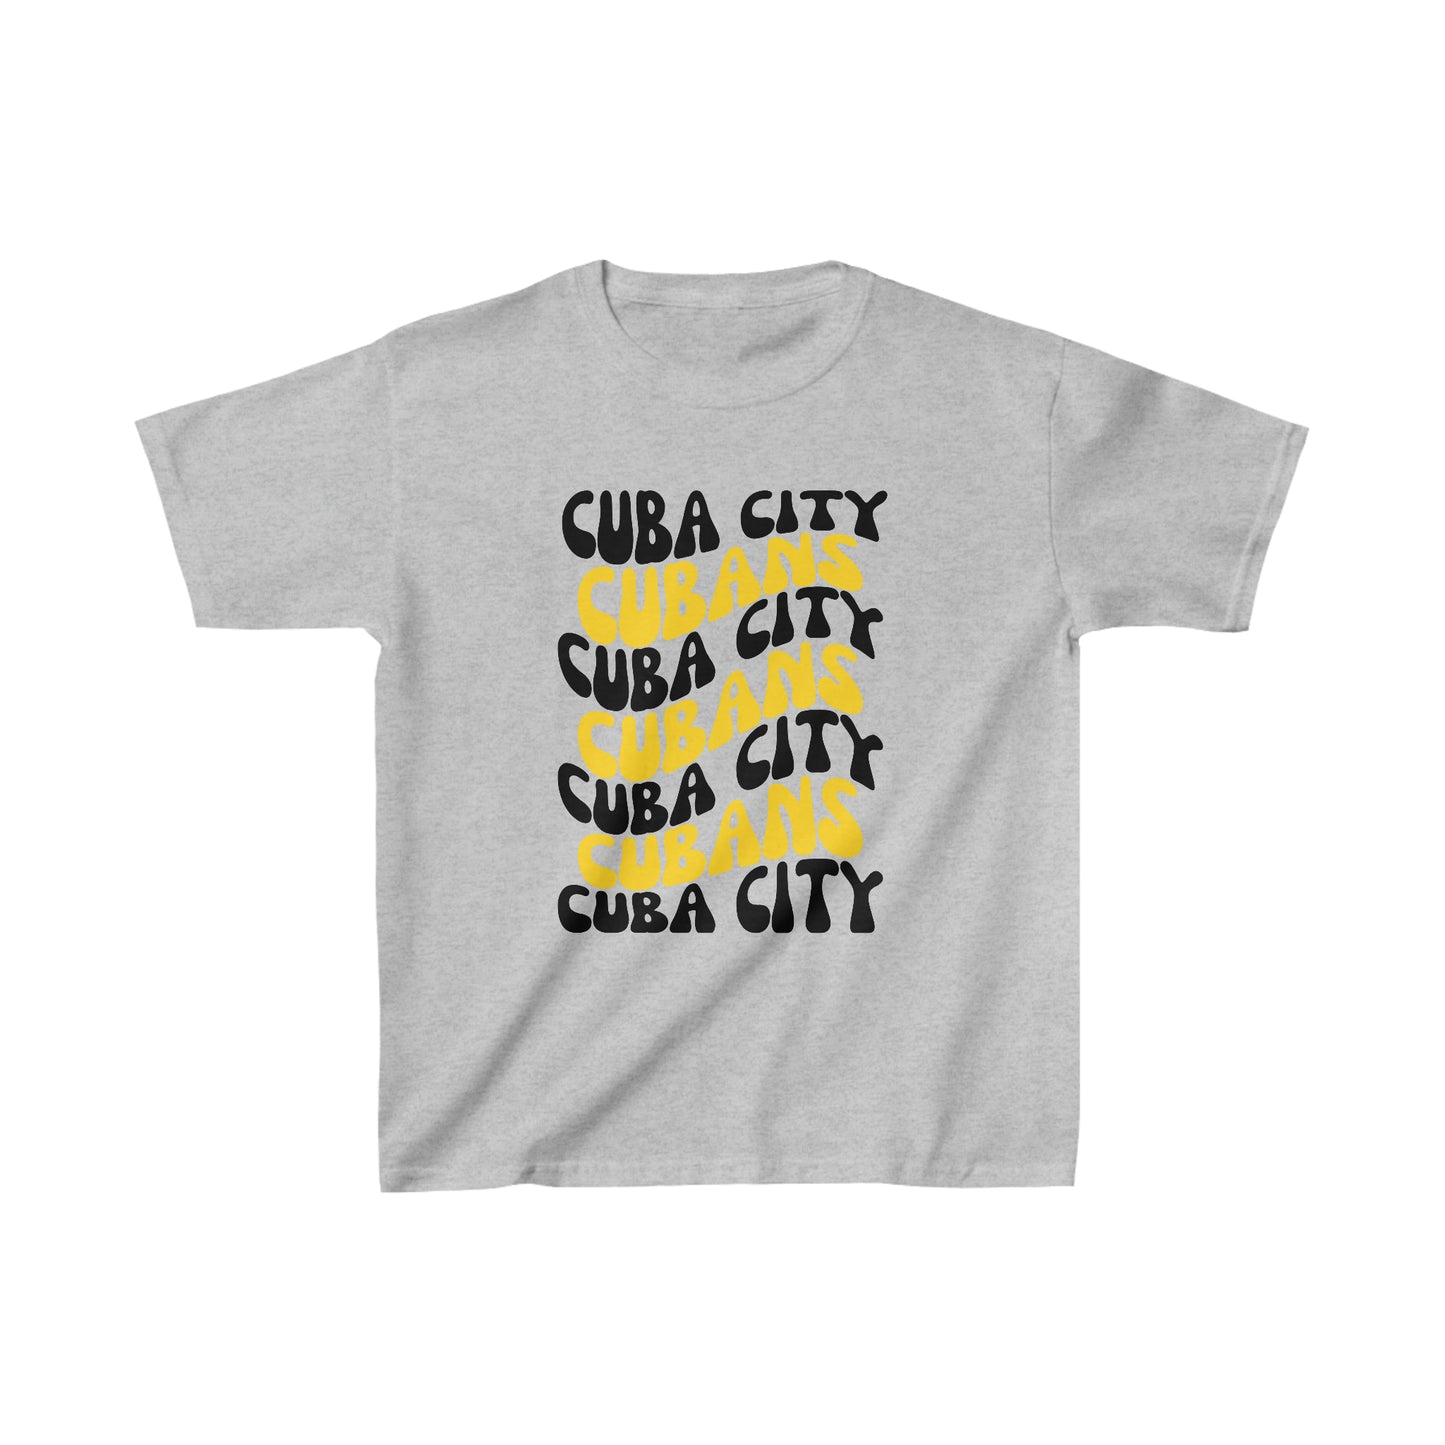 Cuba City Cubans - Kids T-Shirt